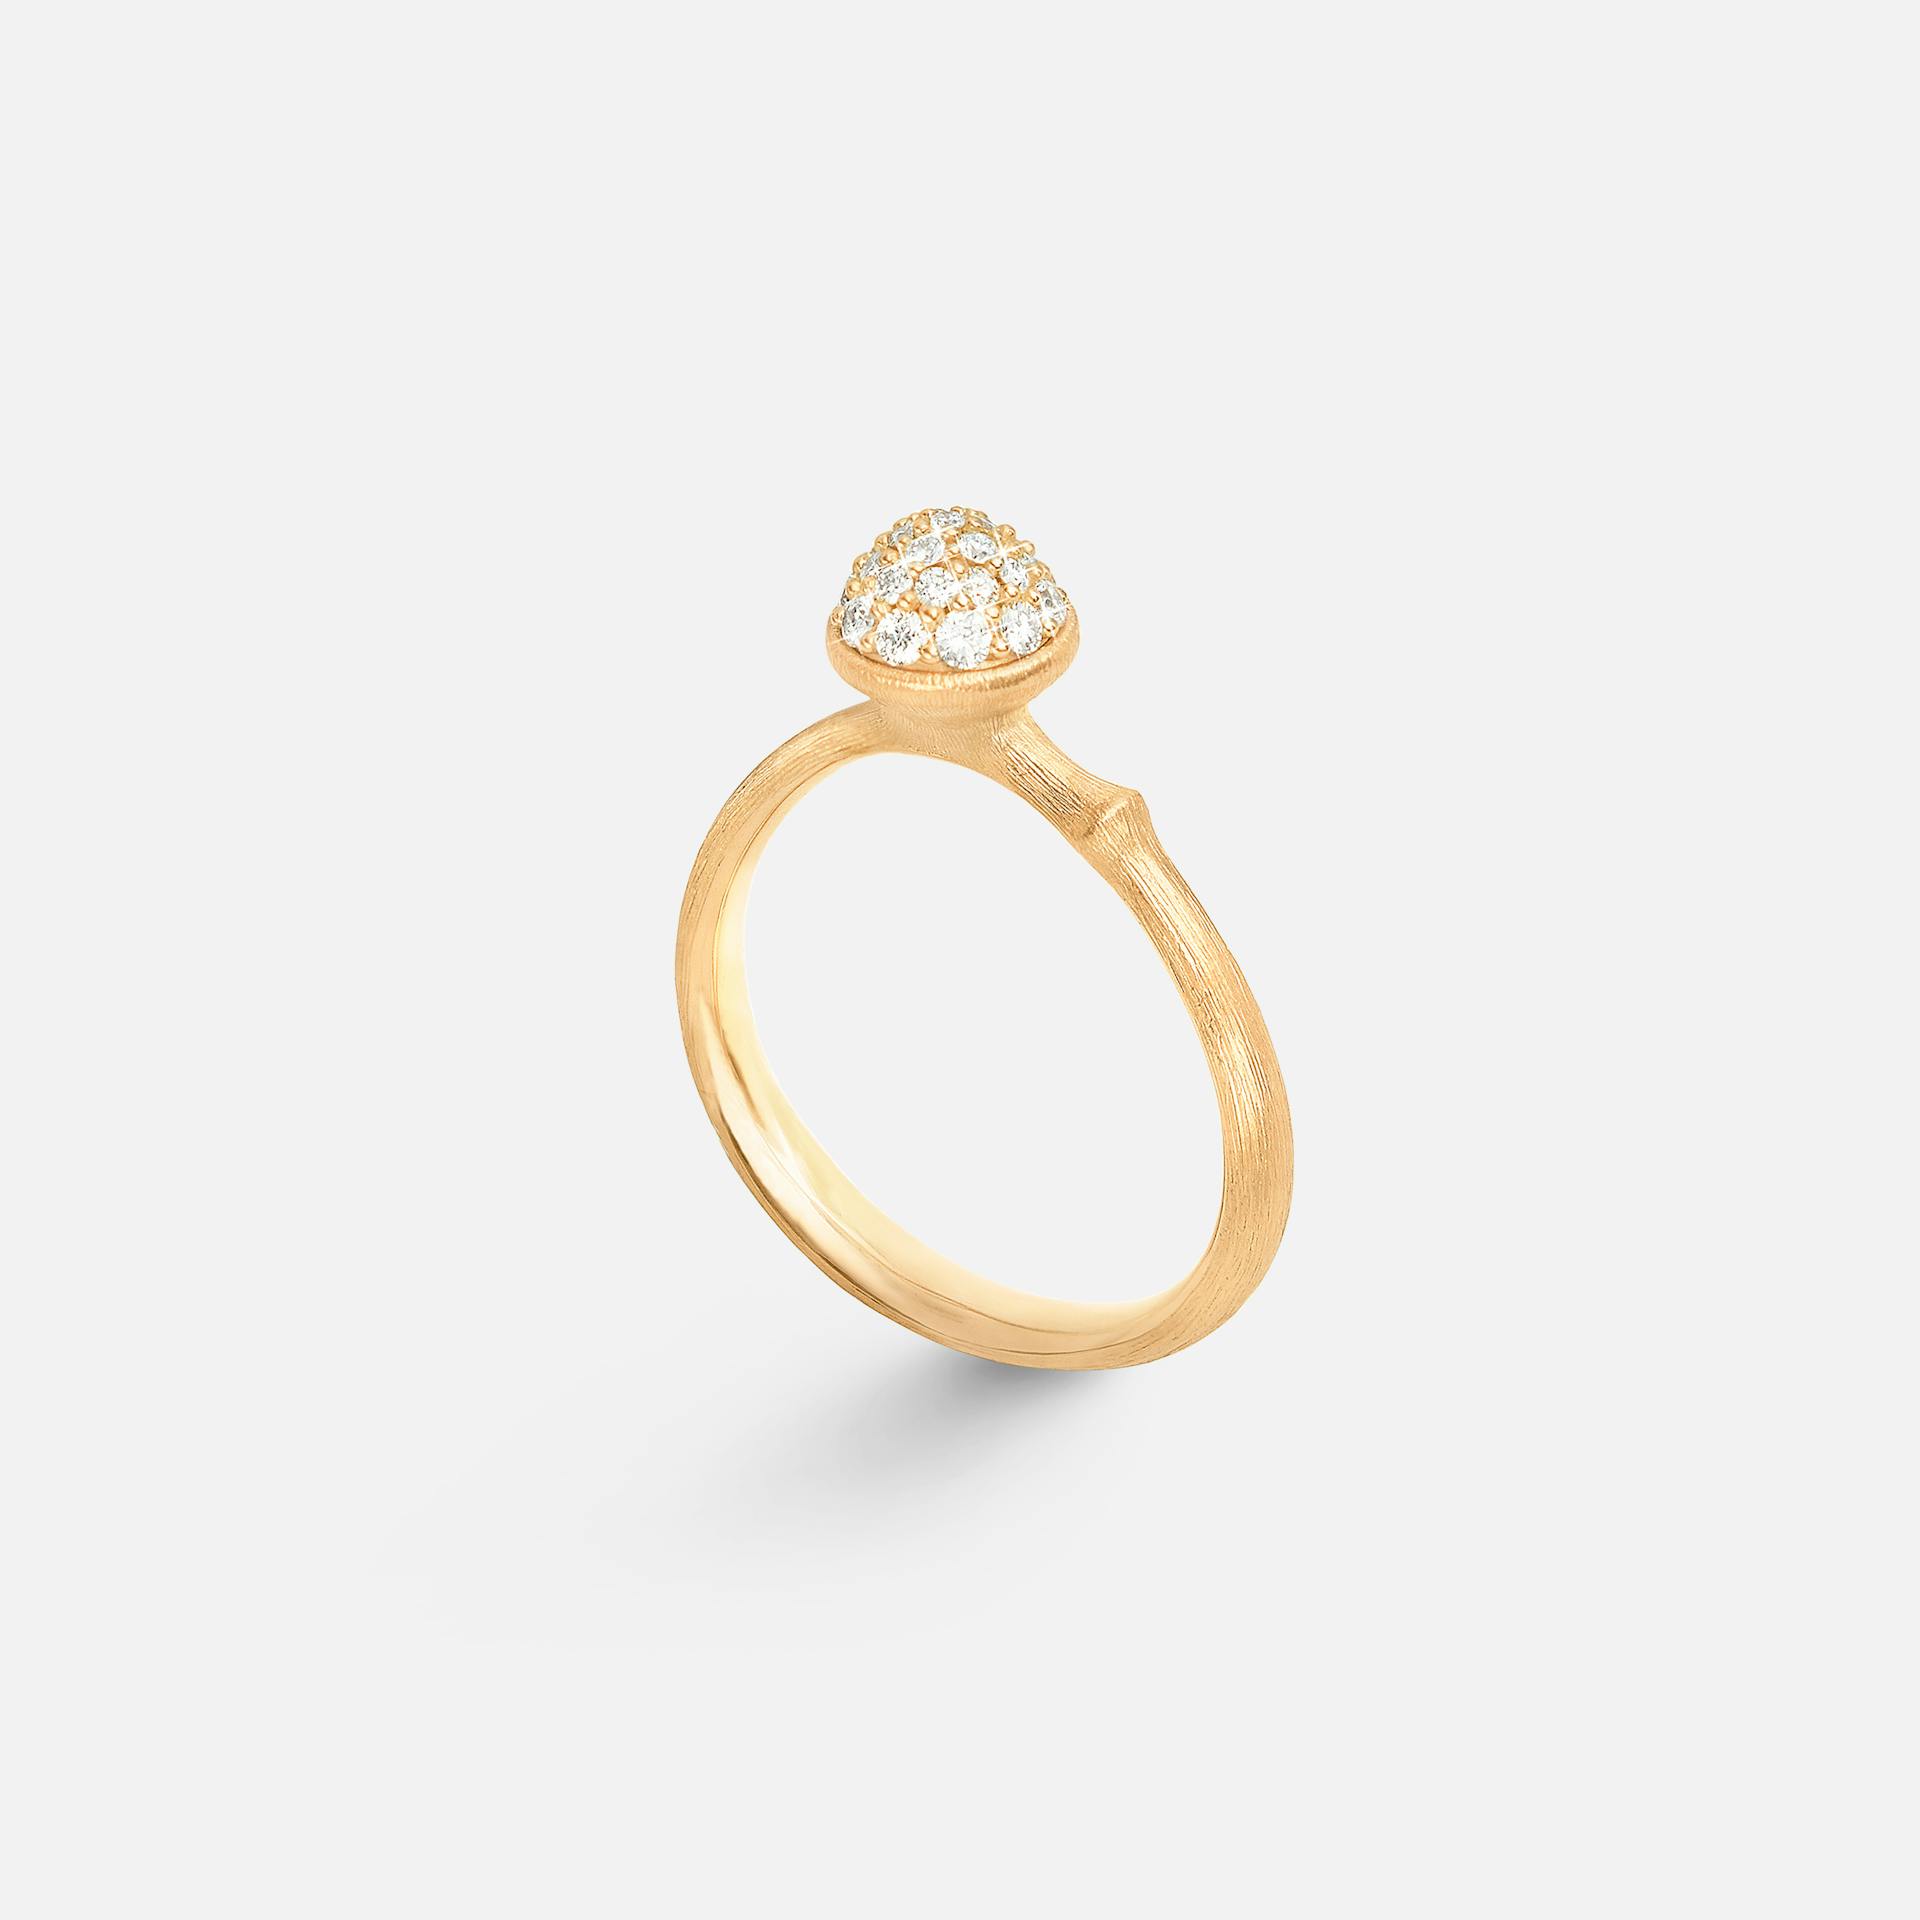 Lotus Ring Small in 18 Karat Yellow Gold with Diamonds  |  Ole Lynggaard Copenhagen